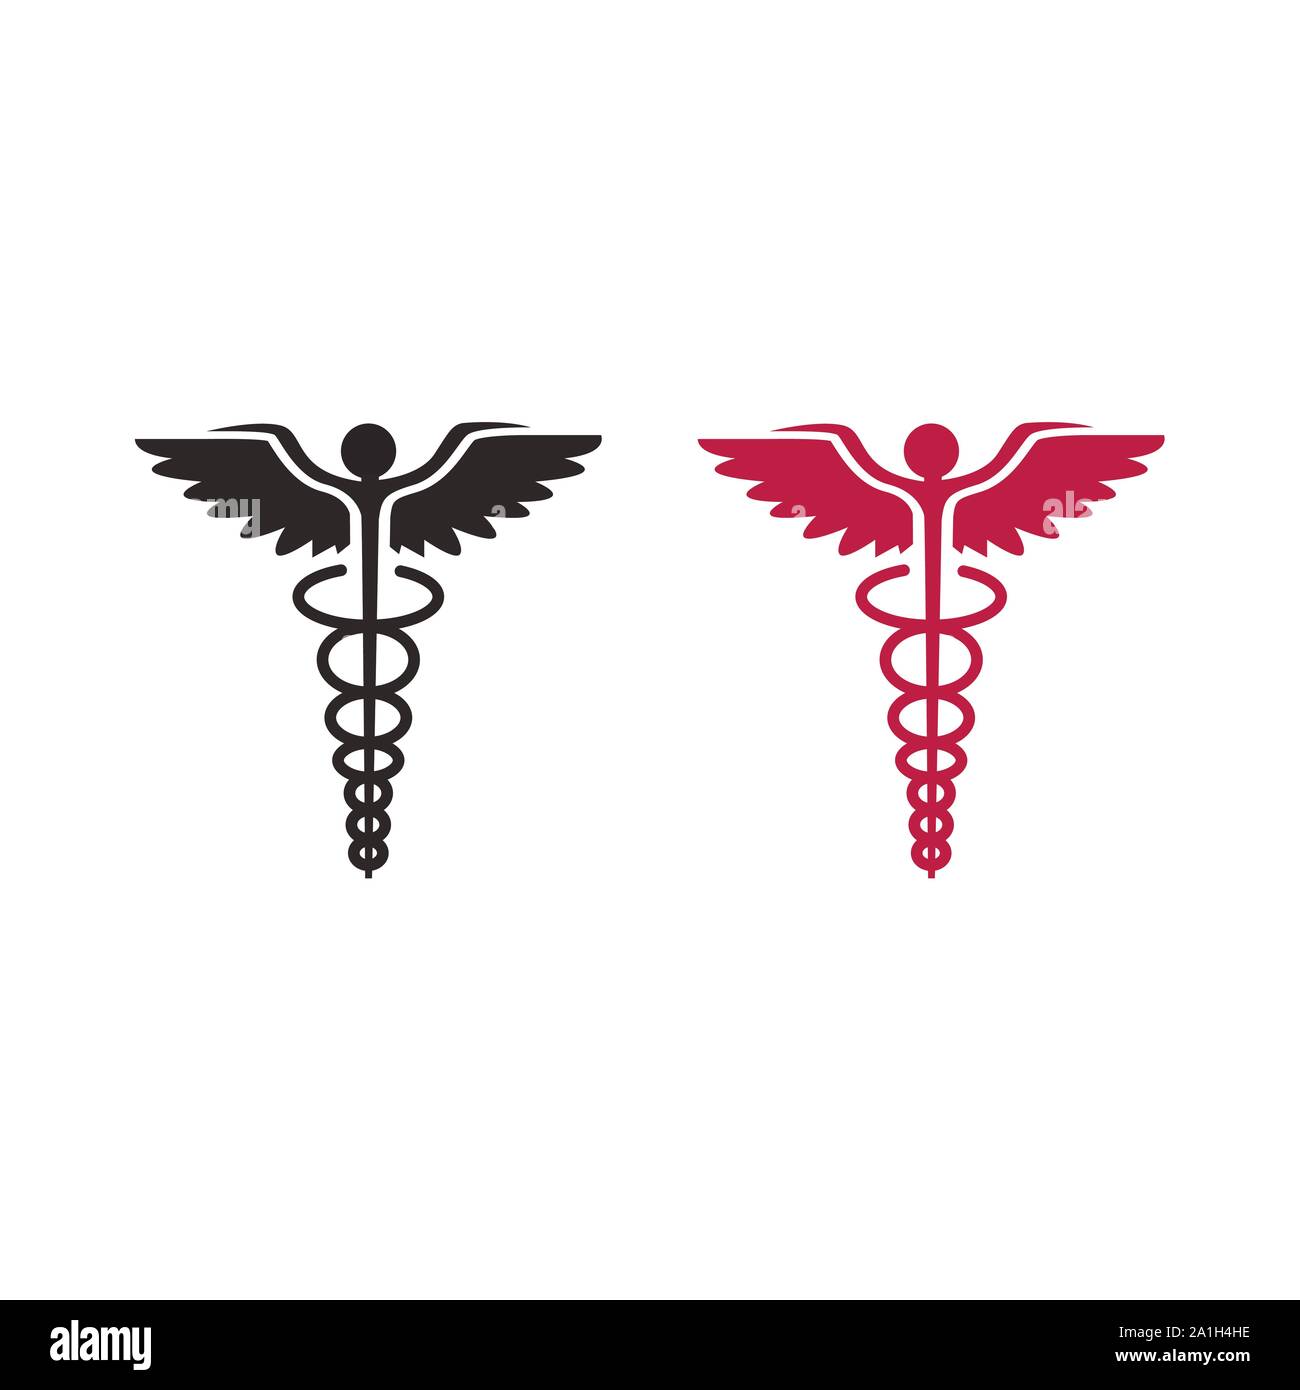 Medical logo. Caduceus symbol Public health has two snake torches Stock Vector